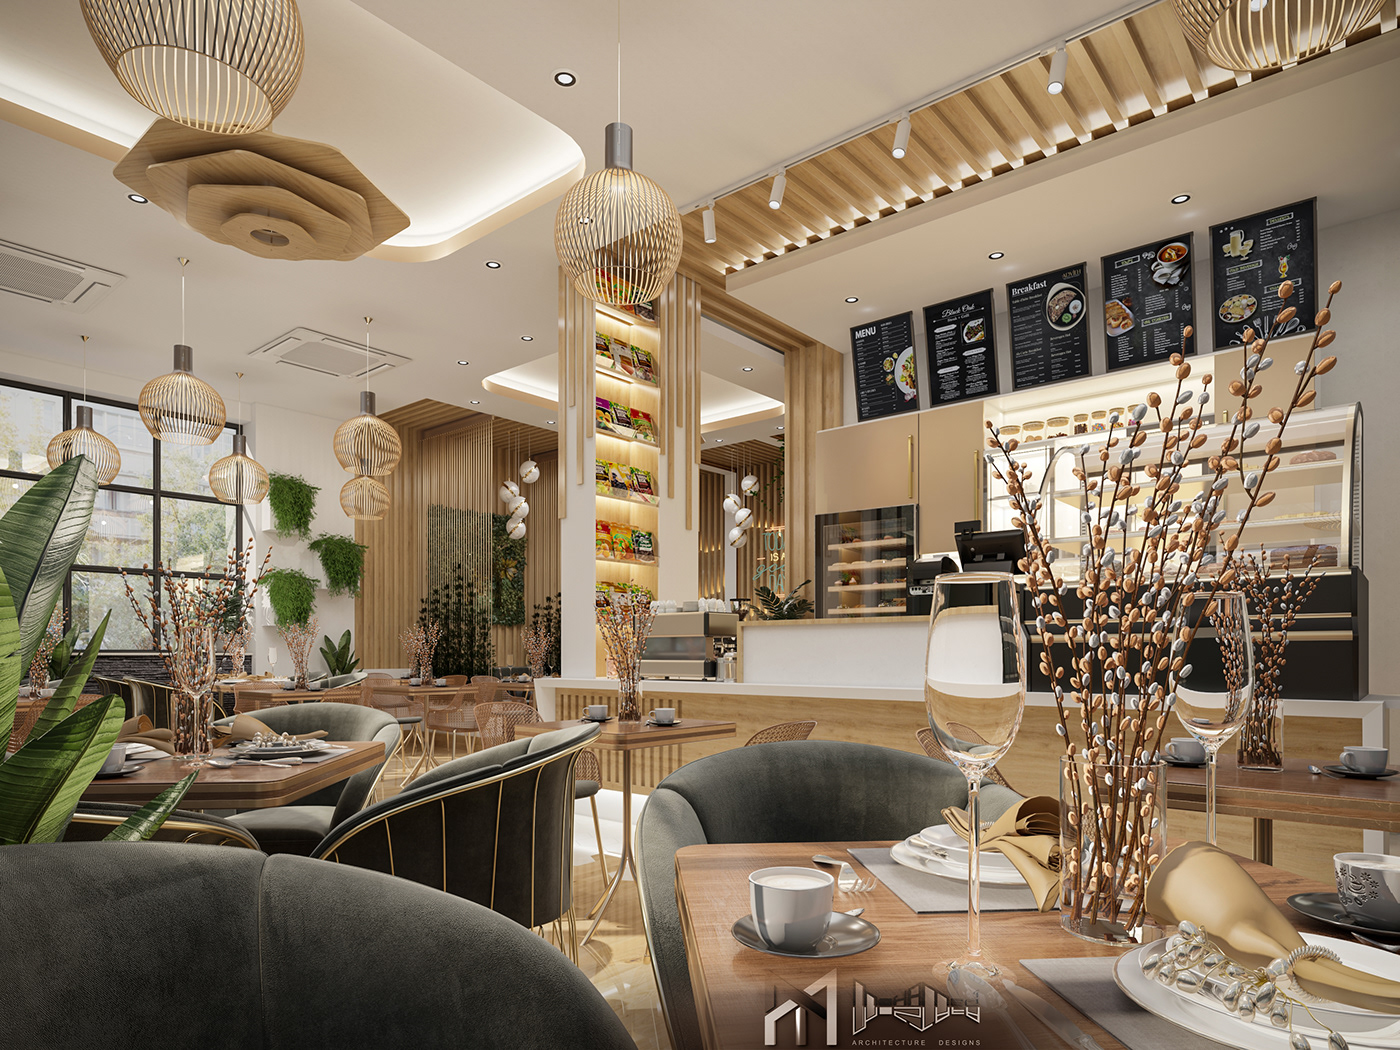 Interior design cafe restaurant bohemian visualization archviz CGI interior design  wood